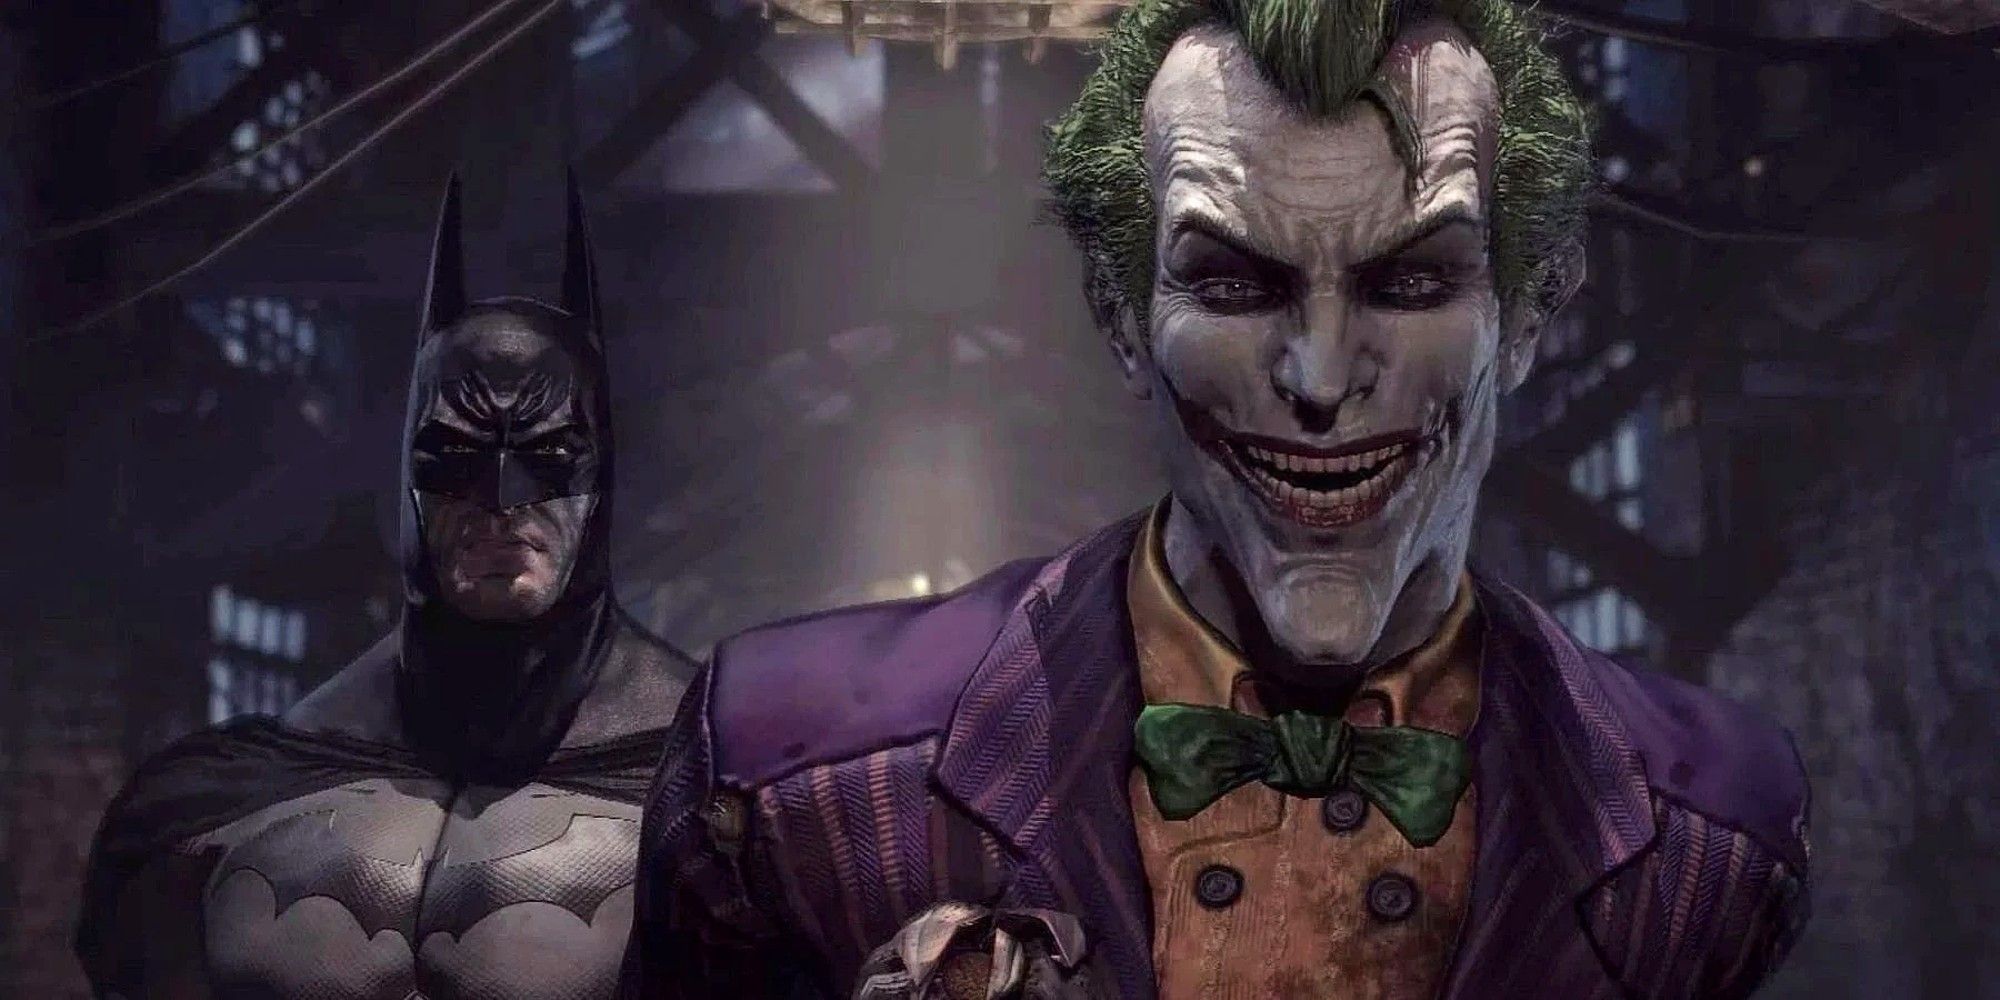 Batman And The Joker From The Batman Arkham Series